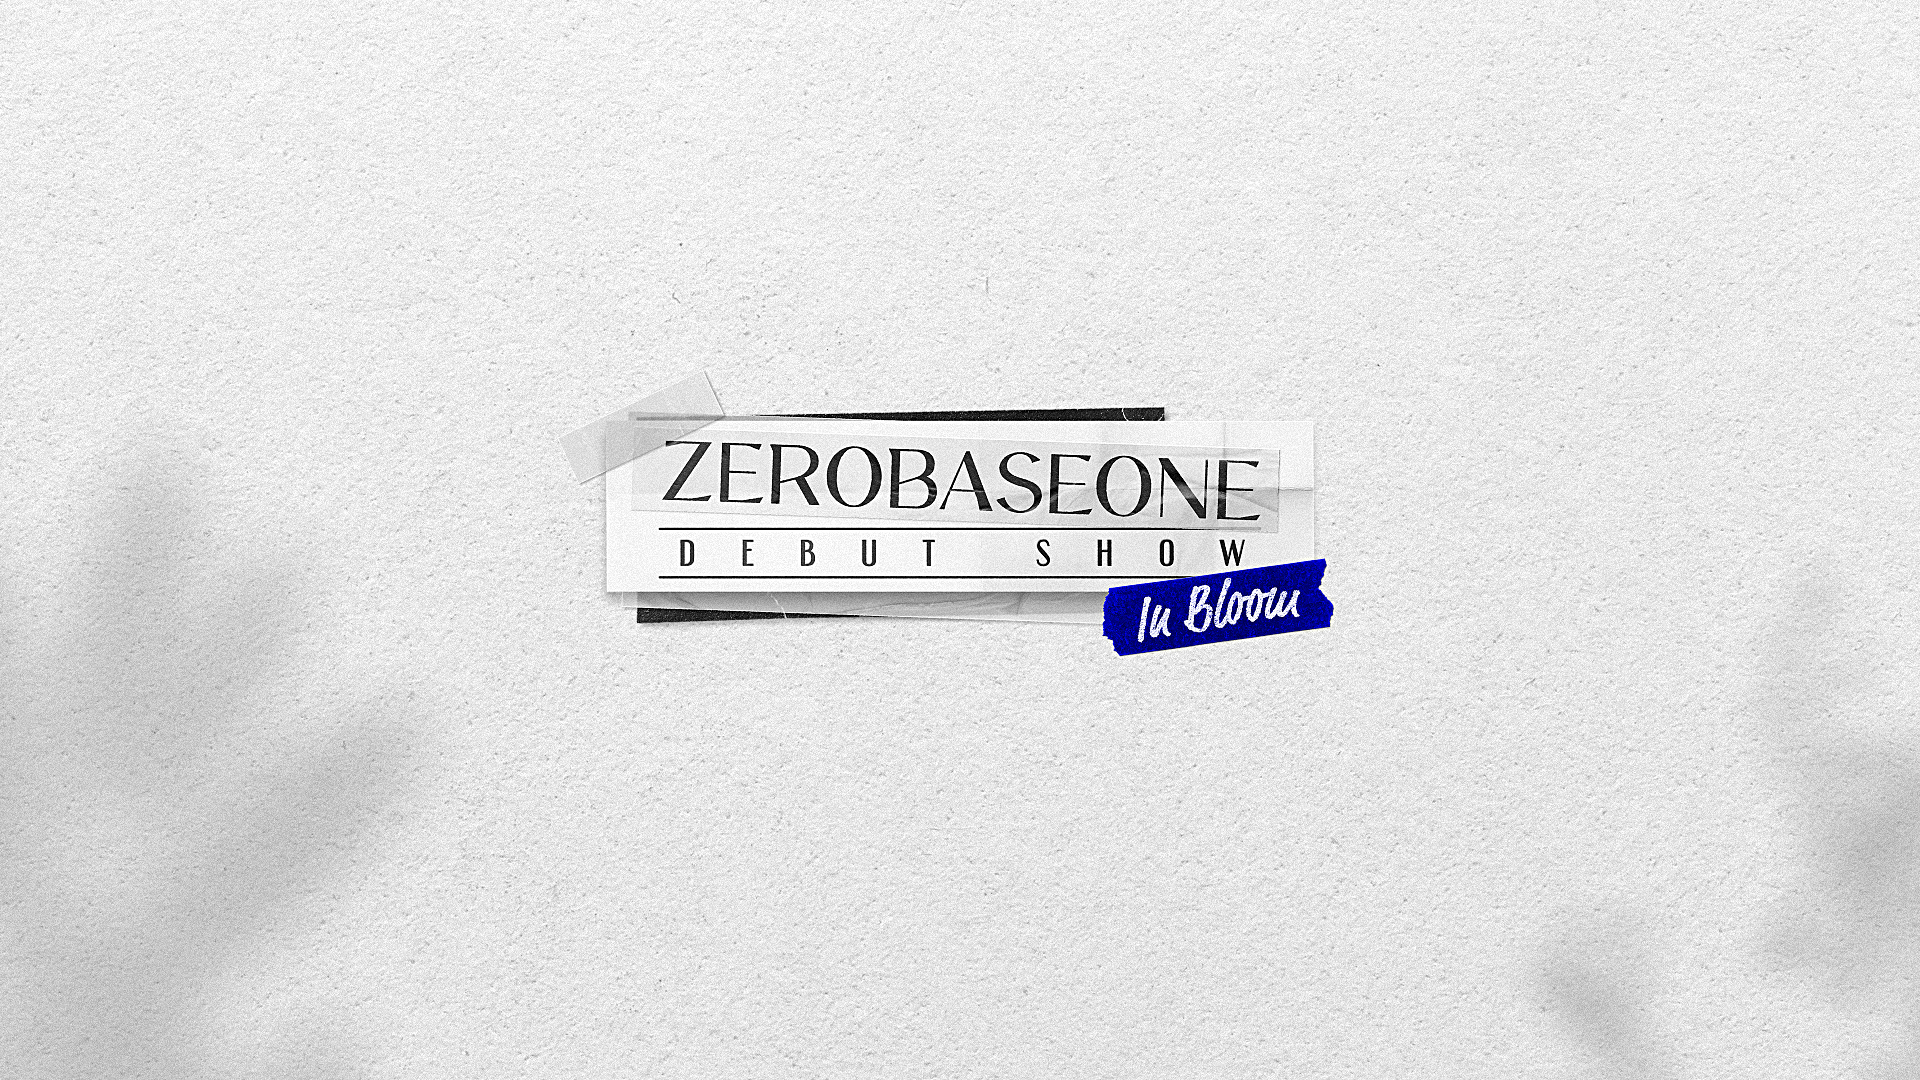 ‘ZEROBASEONE DEBUT SHOW: In Bloom’은 7월 10일(월) 저녁 8시부터 일본과 한국에서 동시 방송 및 전달됩니다!  ｜엠넷 보도자료